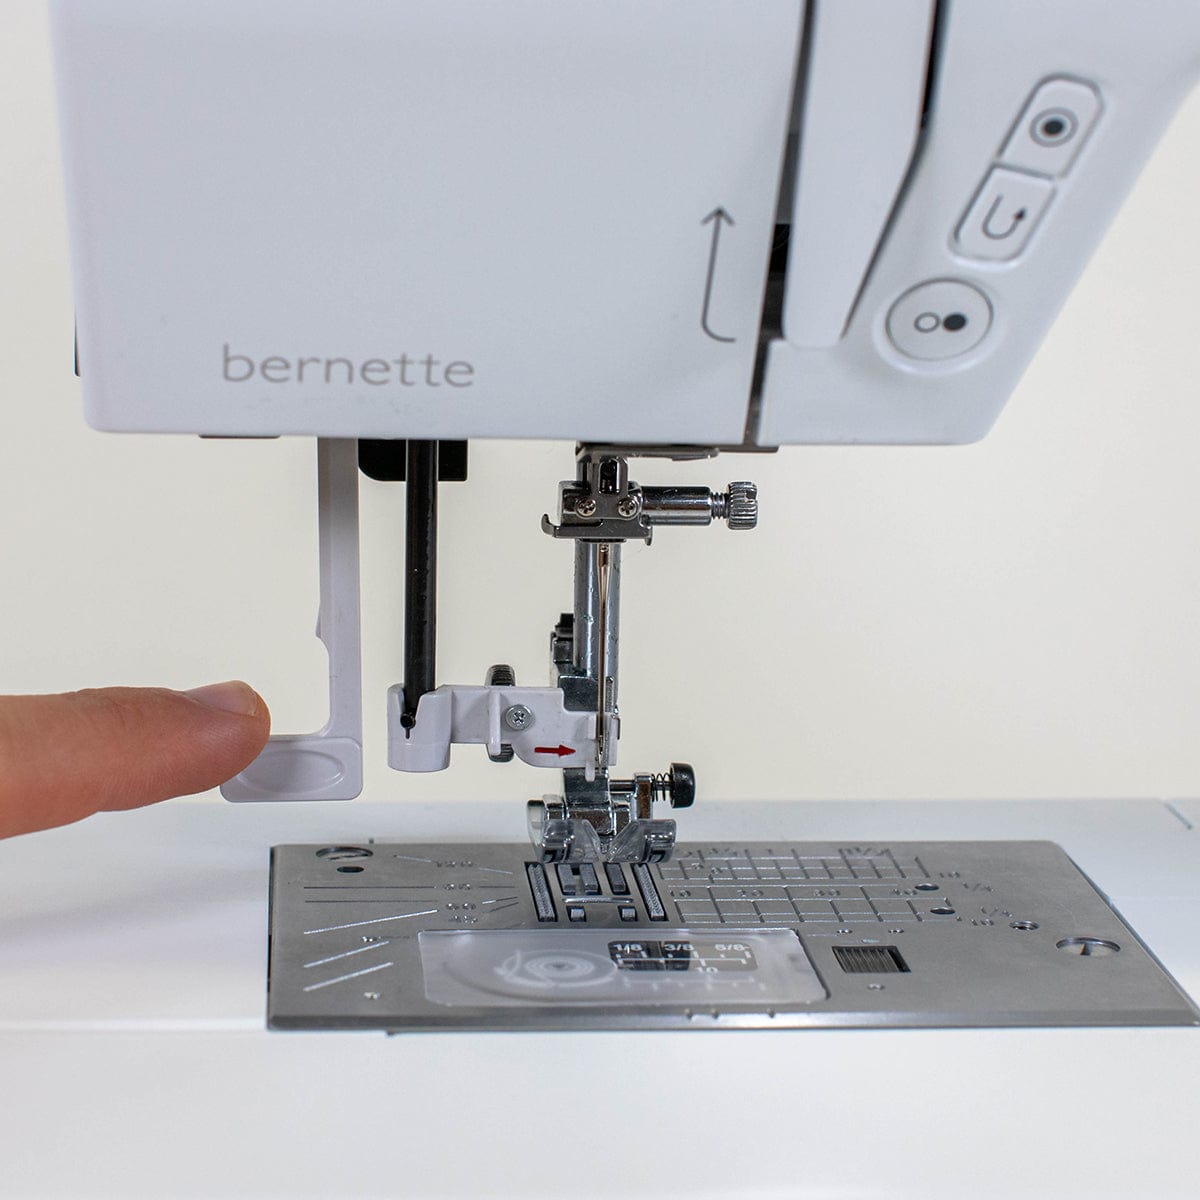 EX-DISPLAY Bernette B38 Sewing Machine